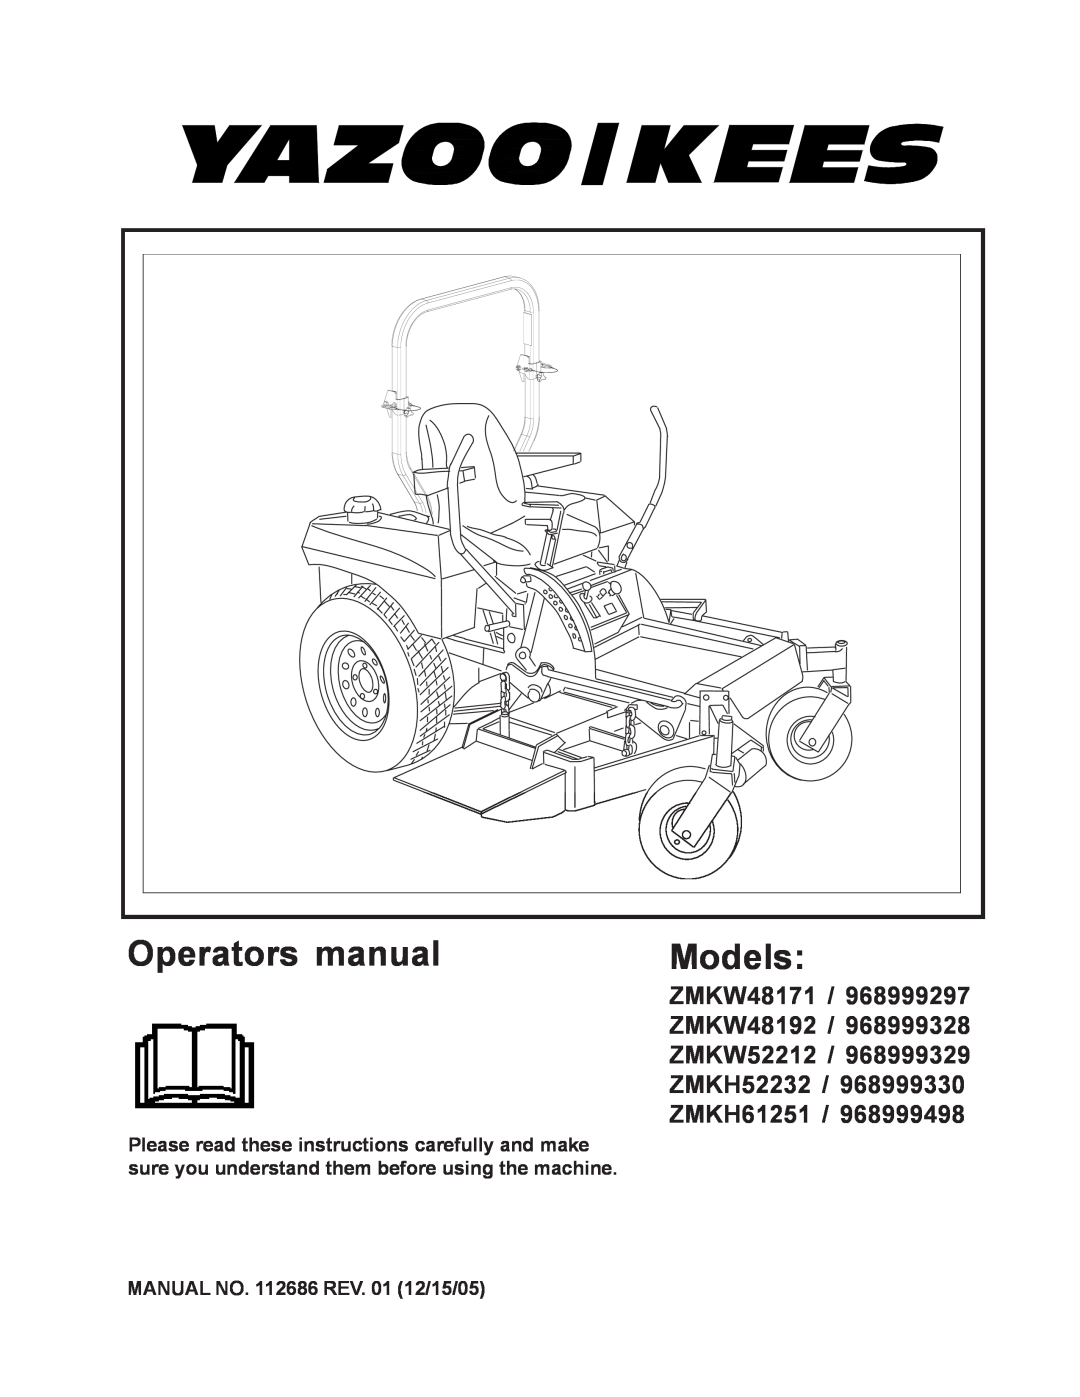 Yazoo/Kees ZMKW48192 / 968999328 manual ZMKW48171, ZMKW52212, ZMKH52232, ZMKH61251, Operators manual, Models 